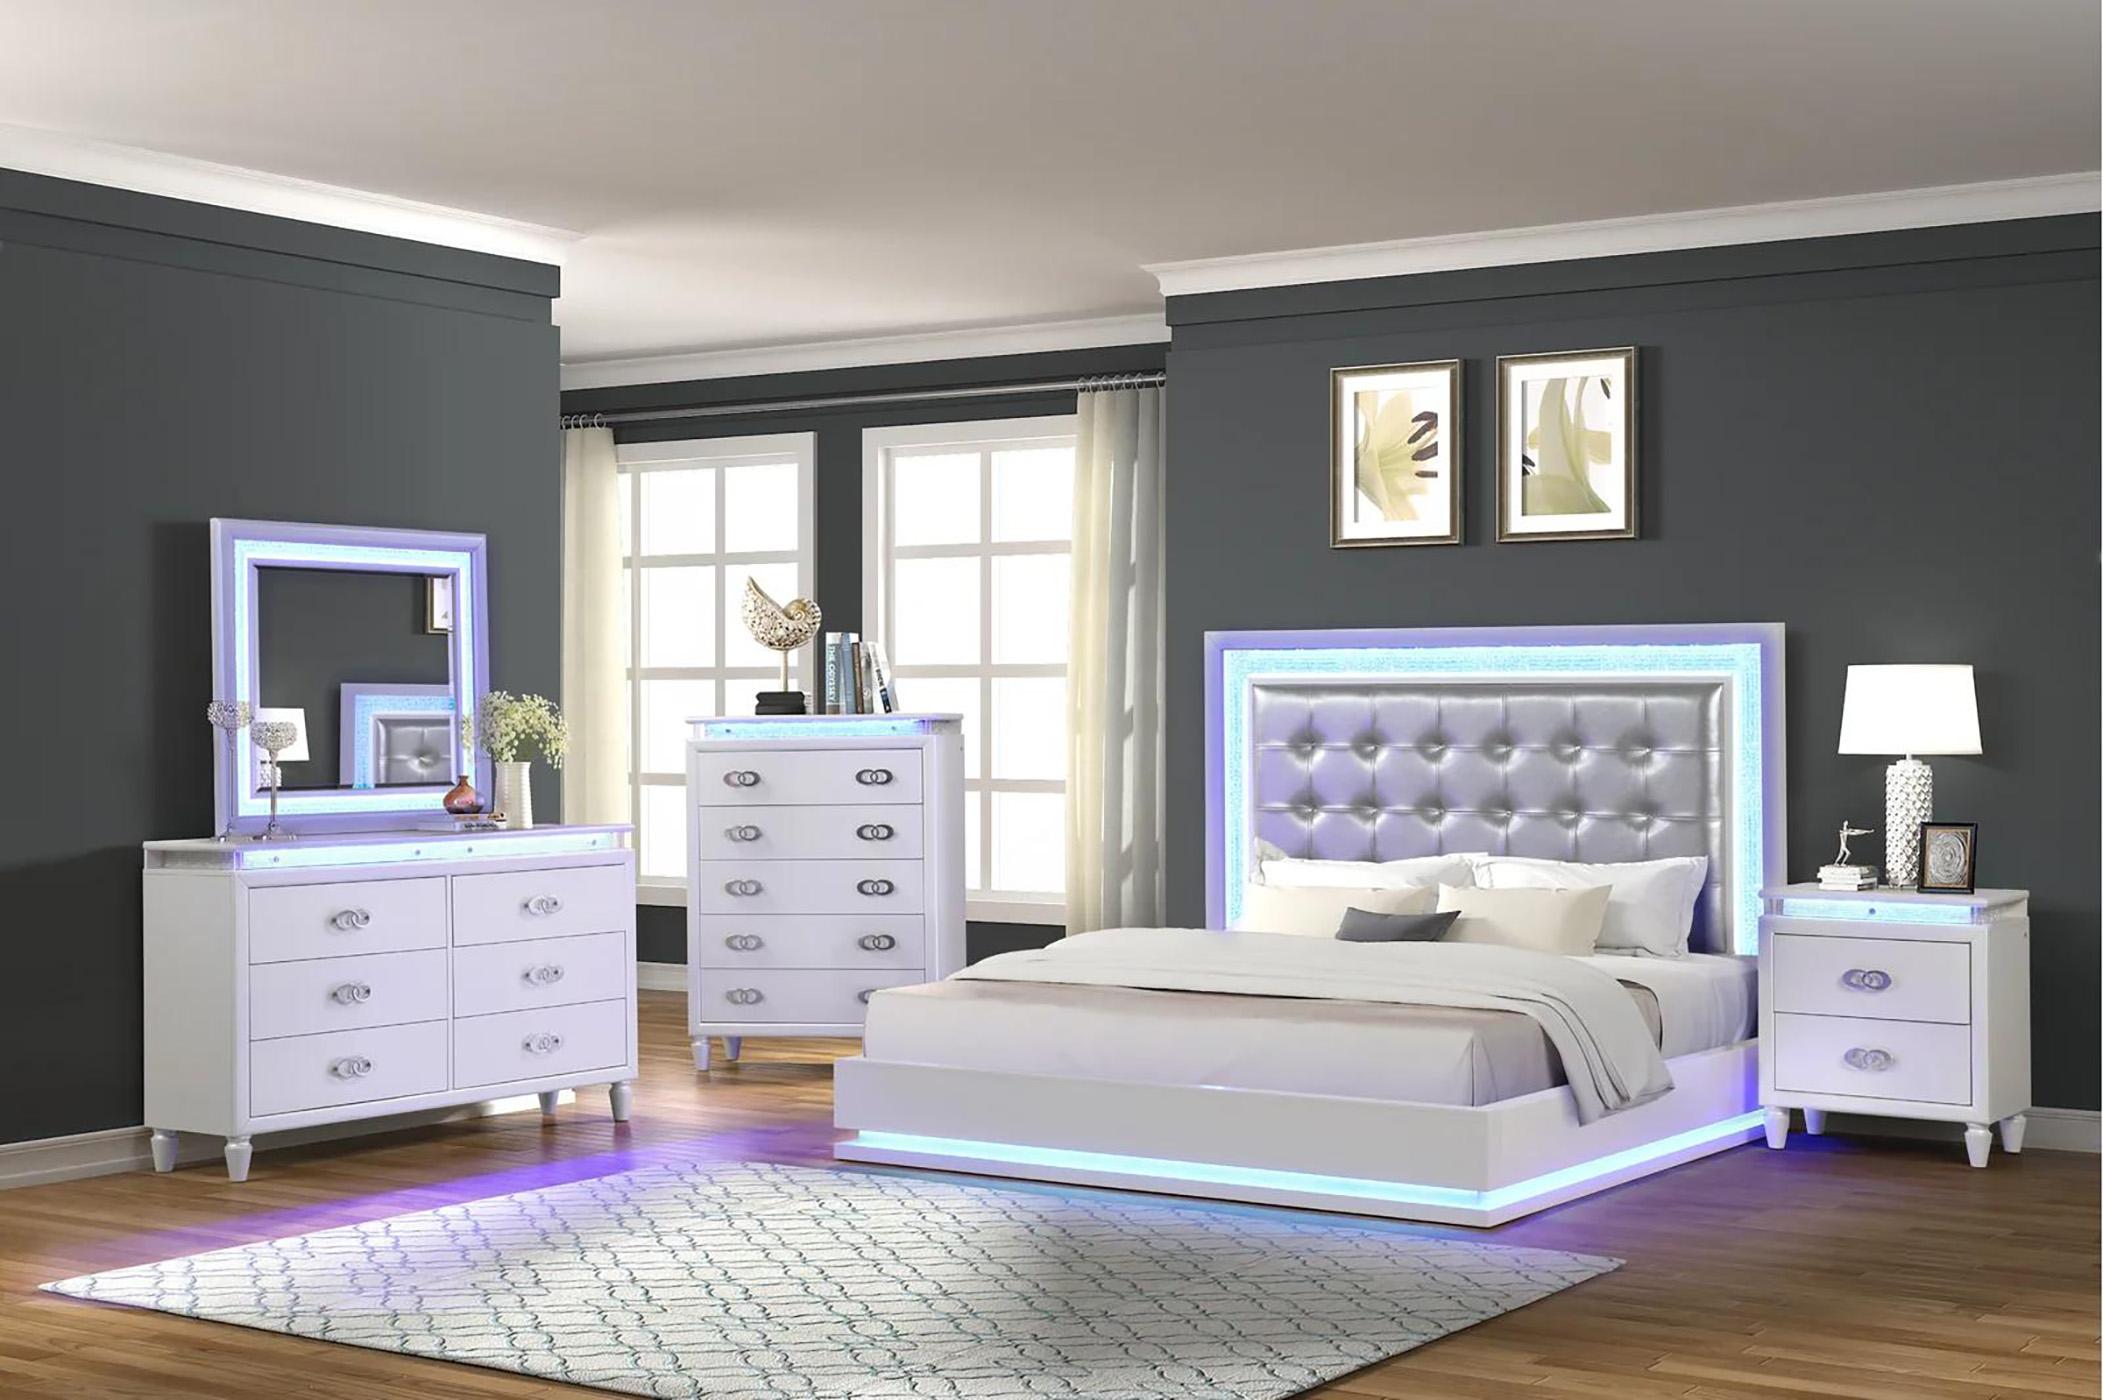 

    
PASSION-Q Galaxy Home Furniture Platform Bed
